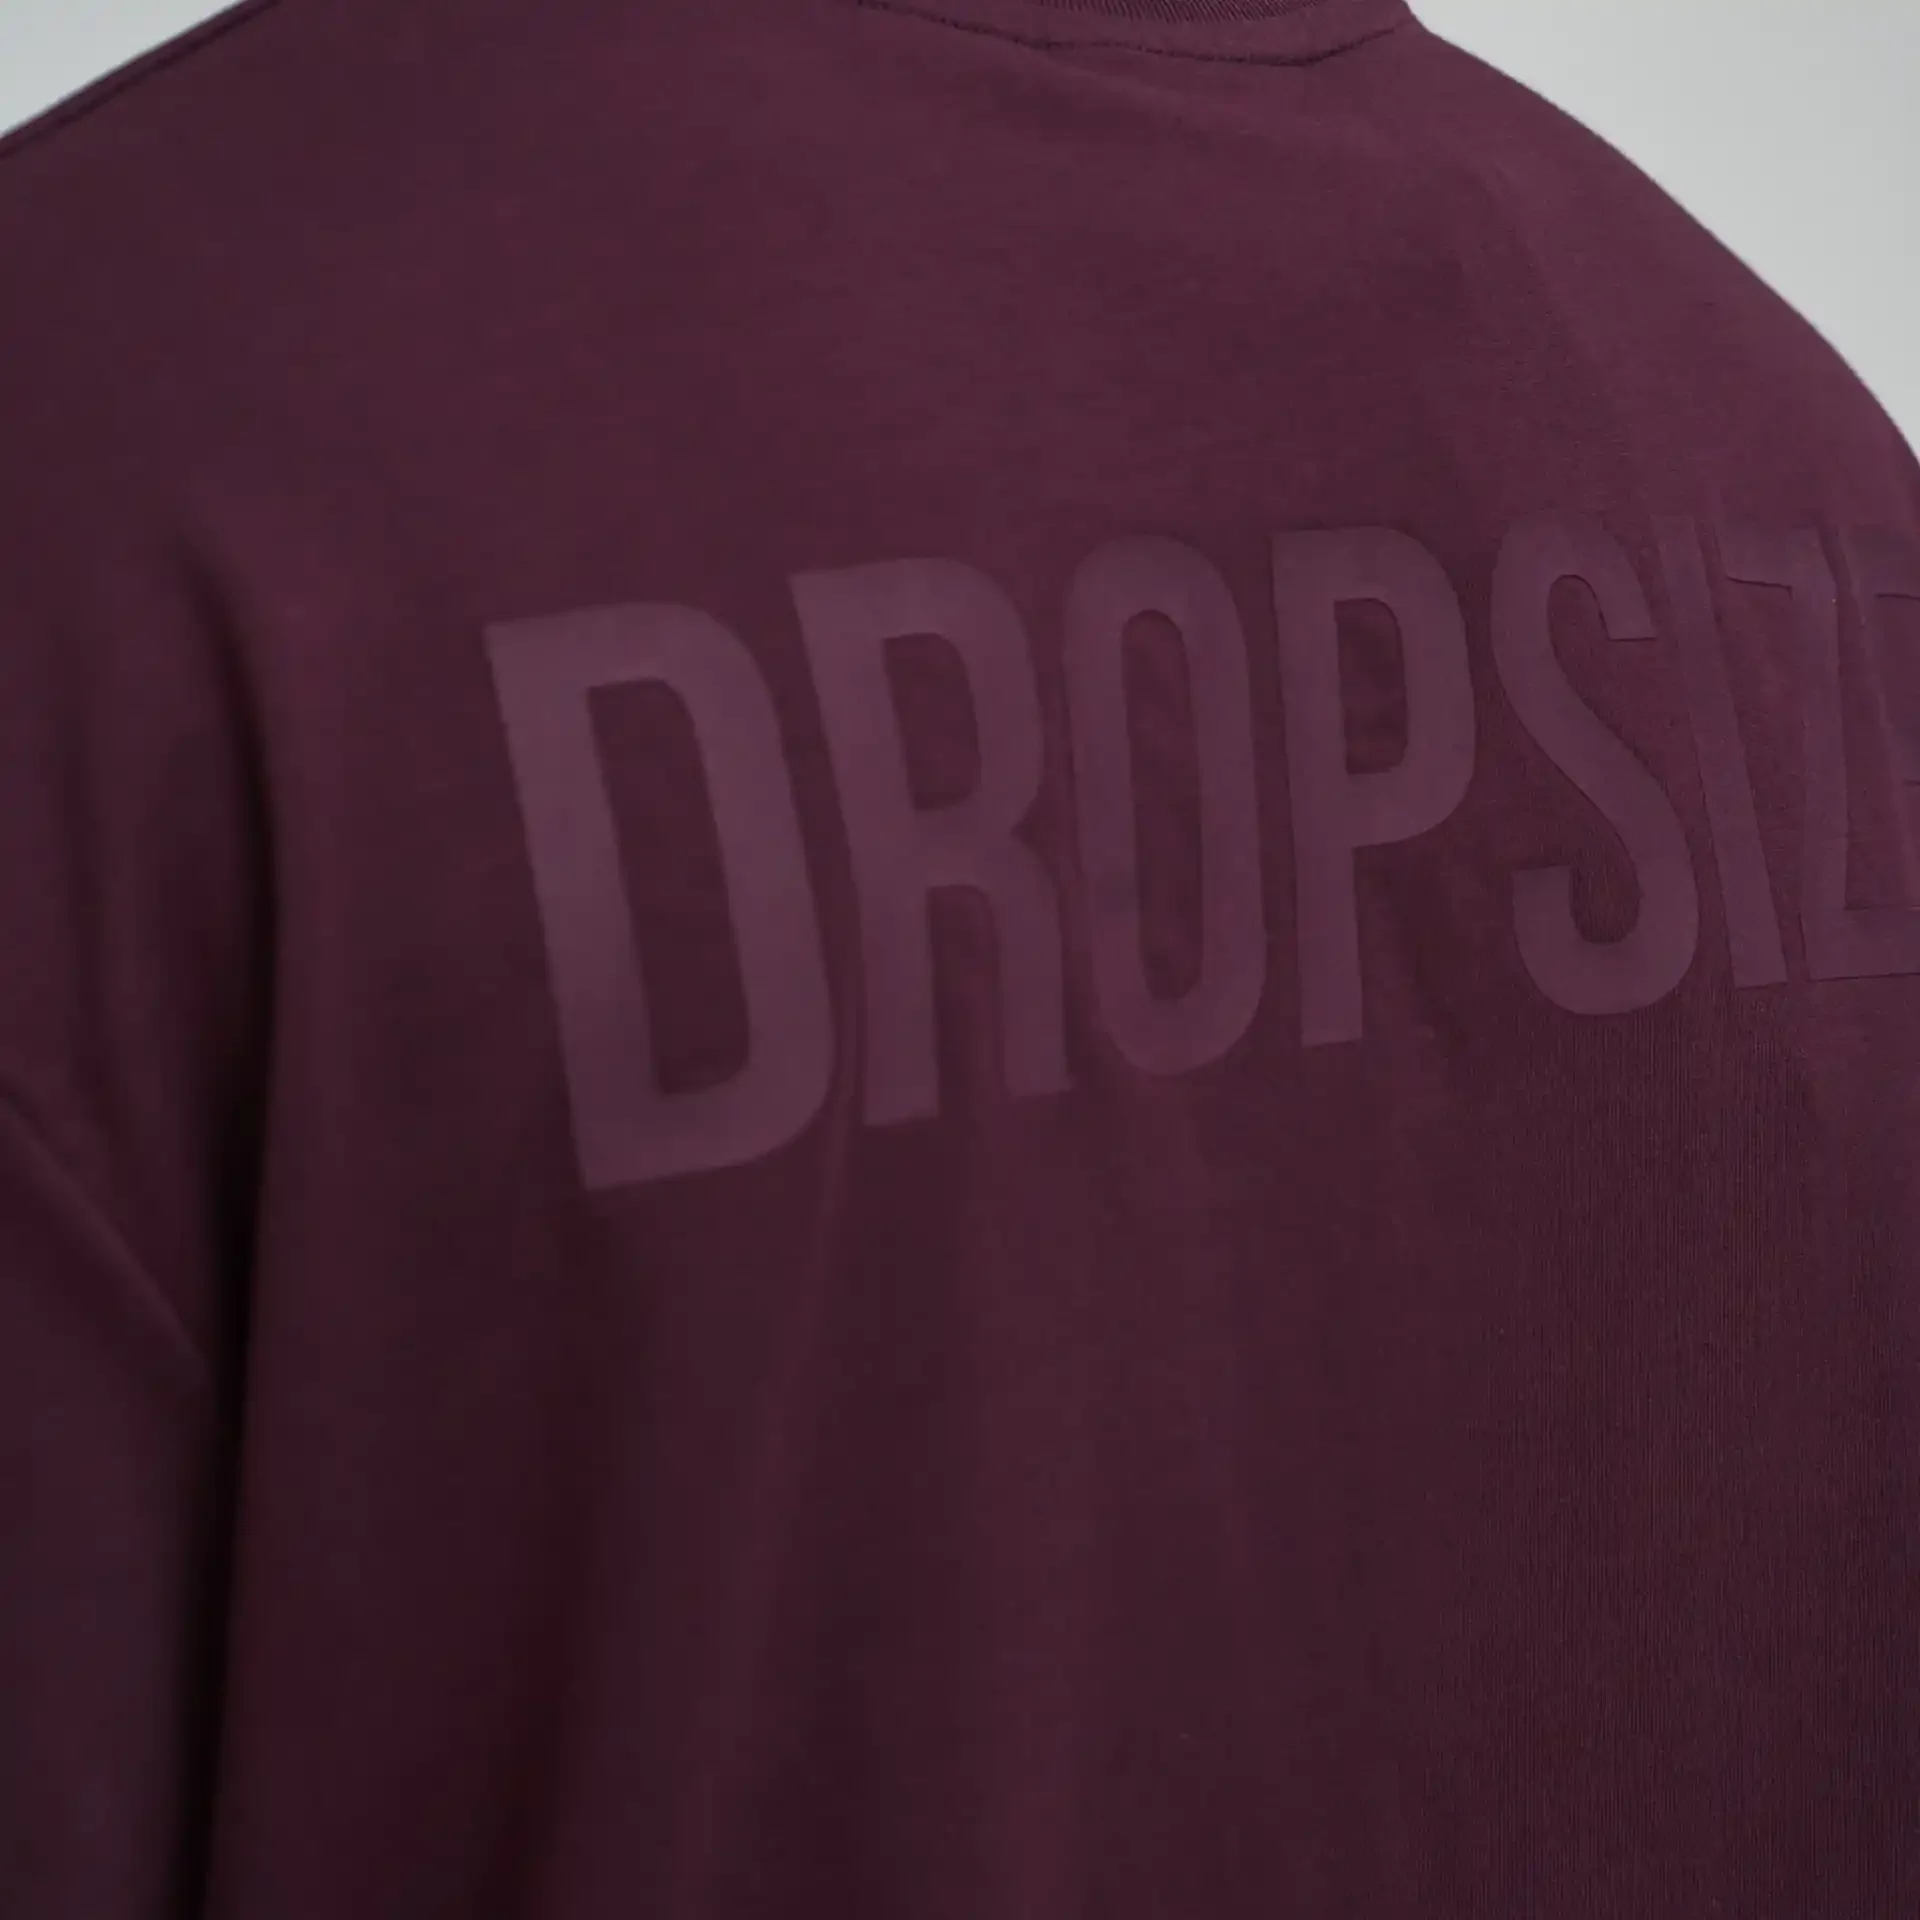 Dropsize Heavy HD Print T-Shirt Washed Grape Wine